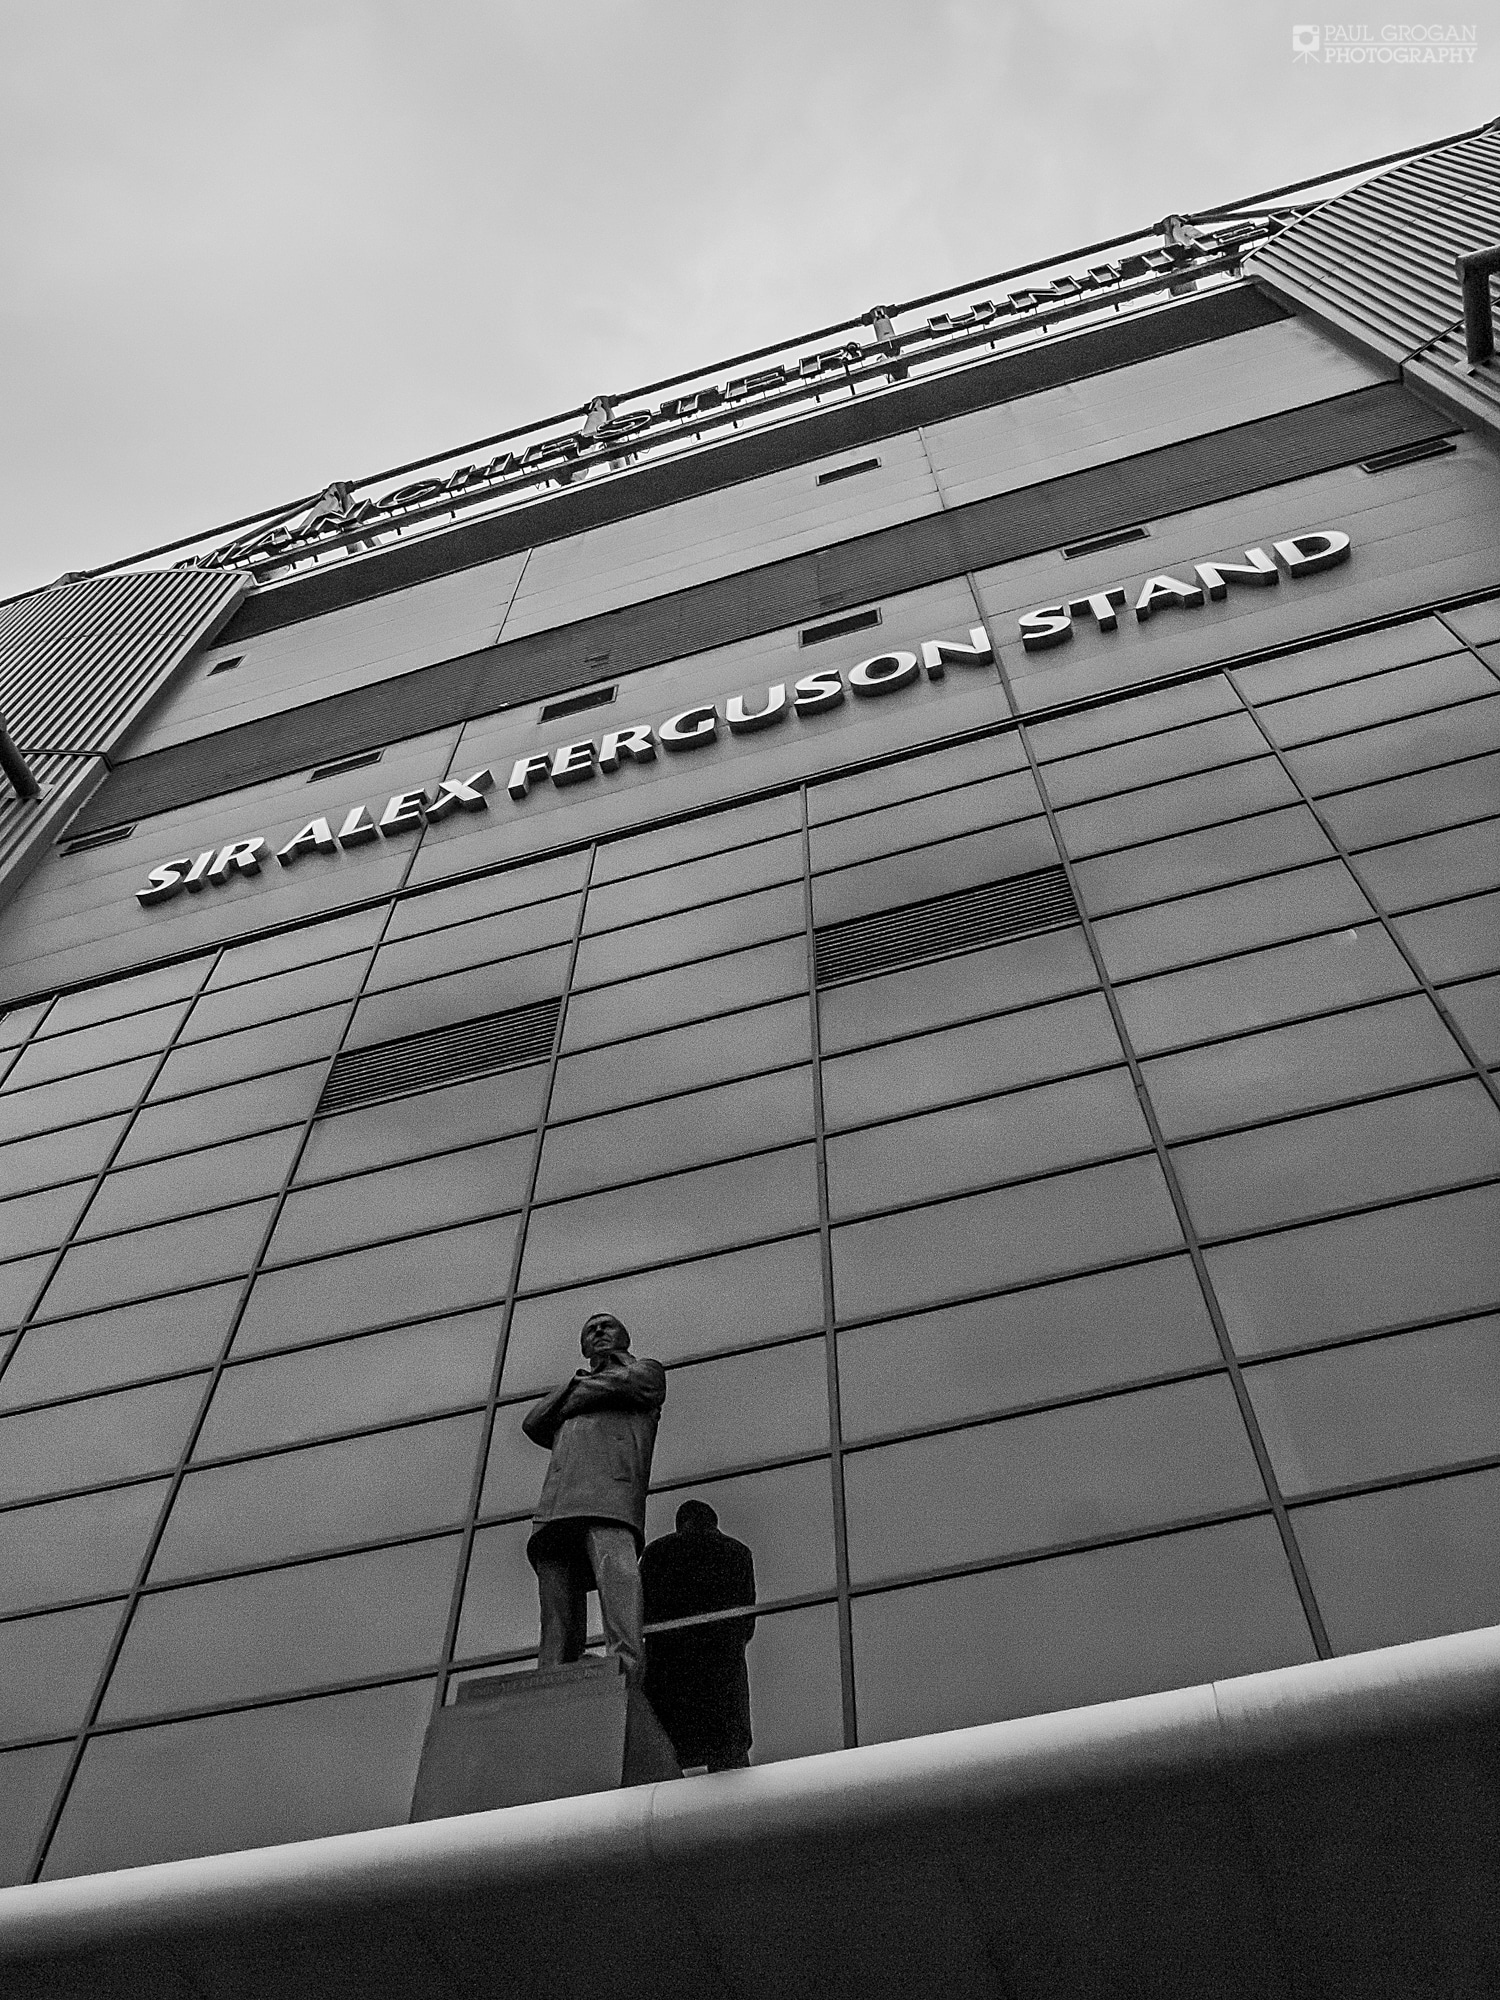 Sir Alex Ferguson Manchester United Print Manchester Landscapes Architecture 2